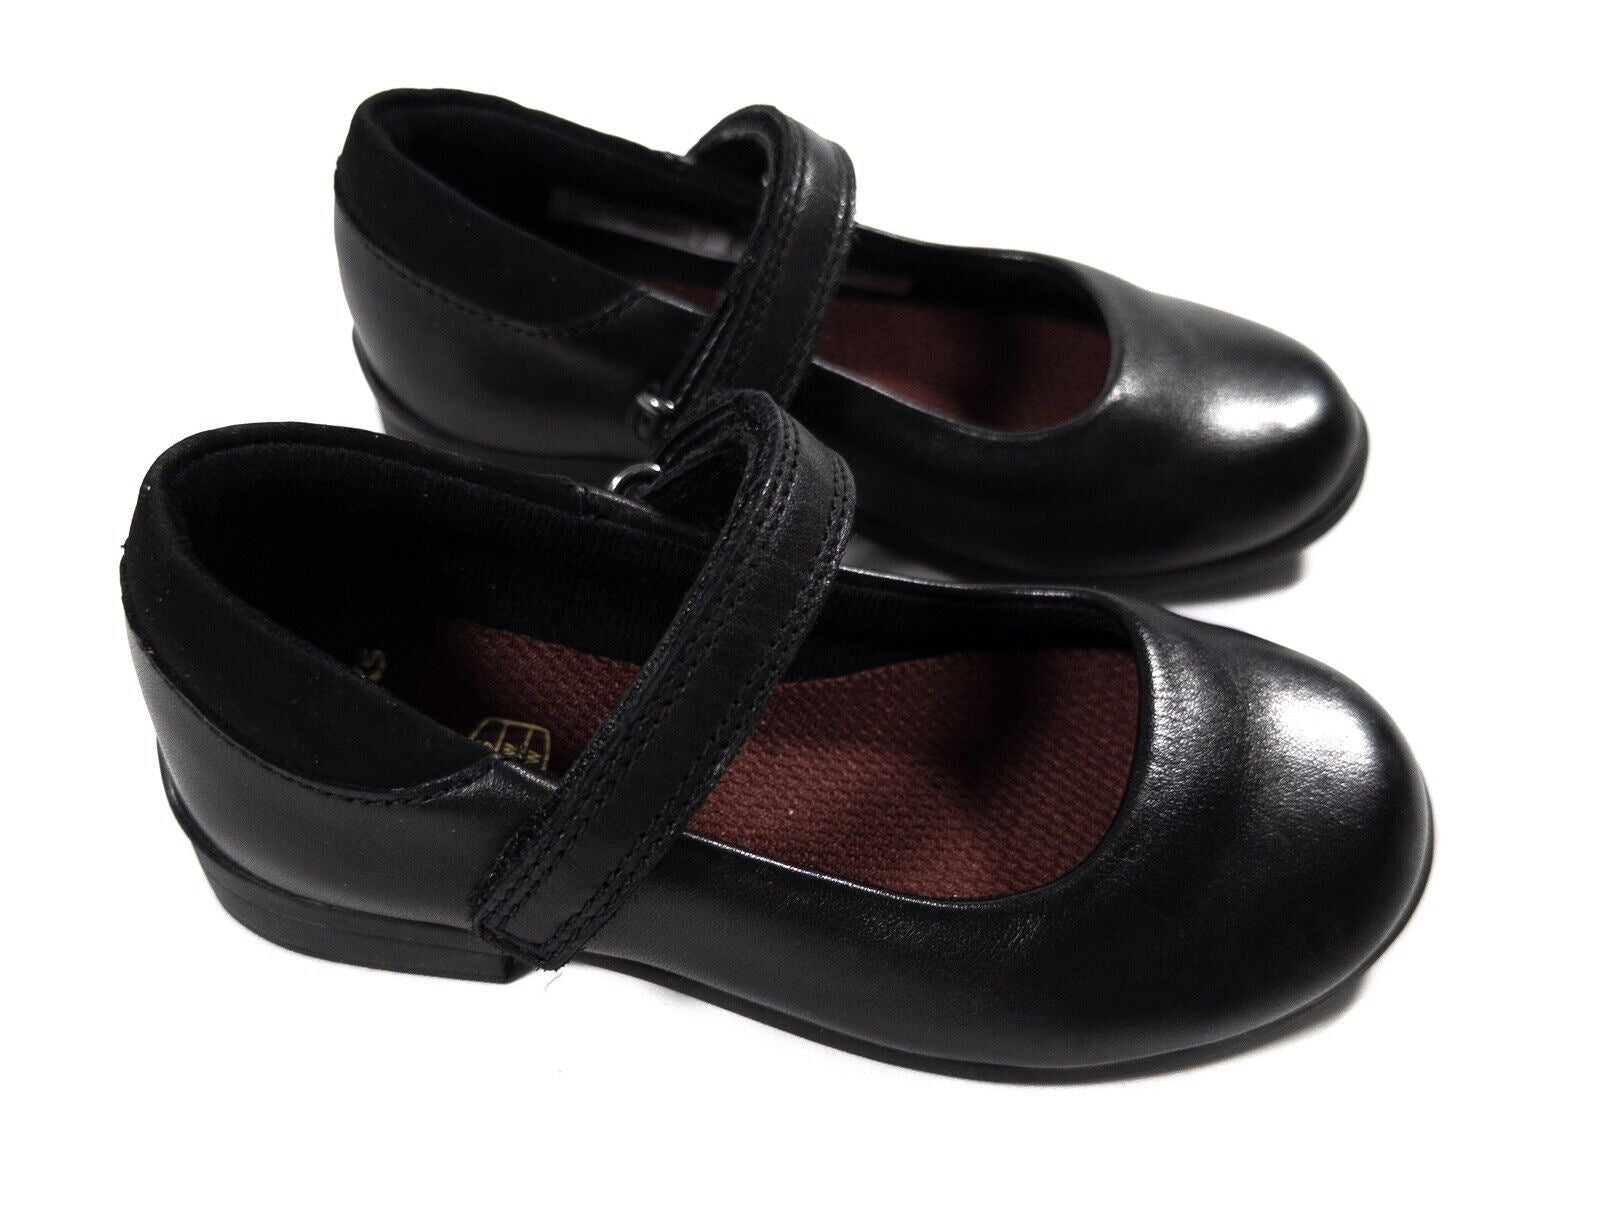 CLARKS Kids Girls Black School Shoes Strappy Size UK 7 G